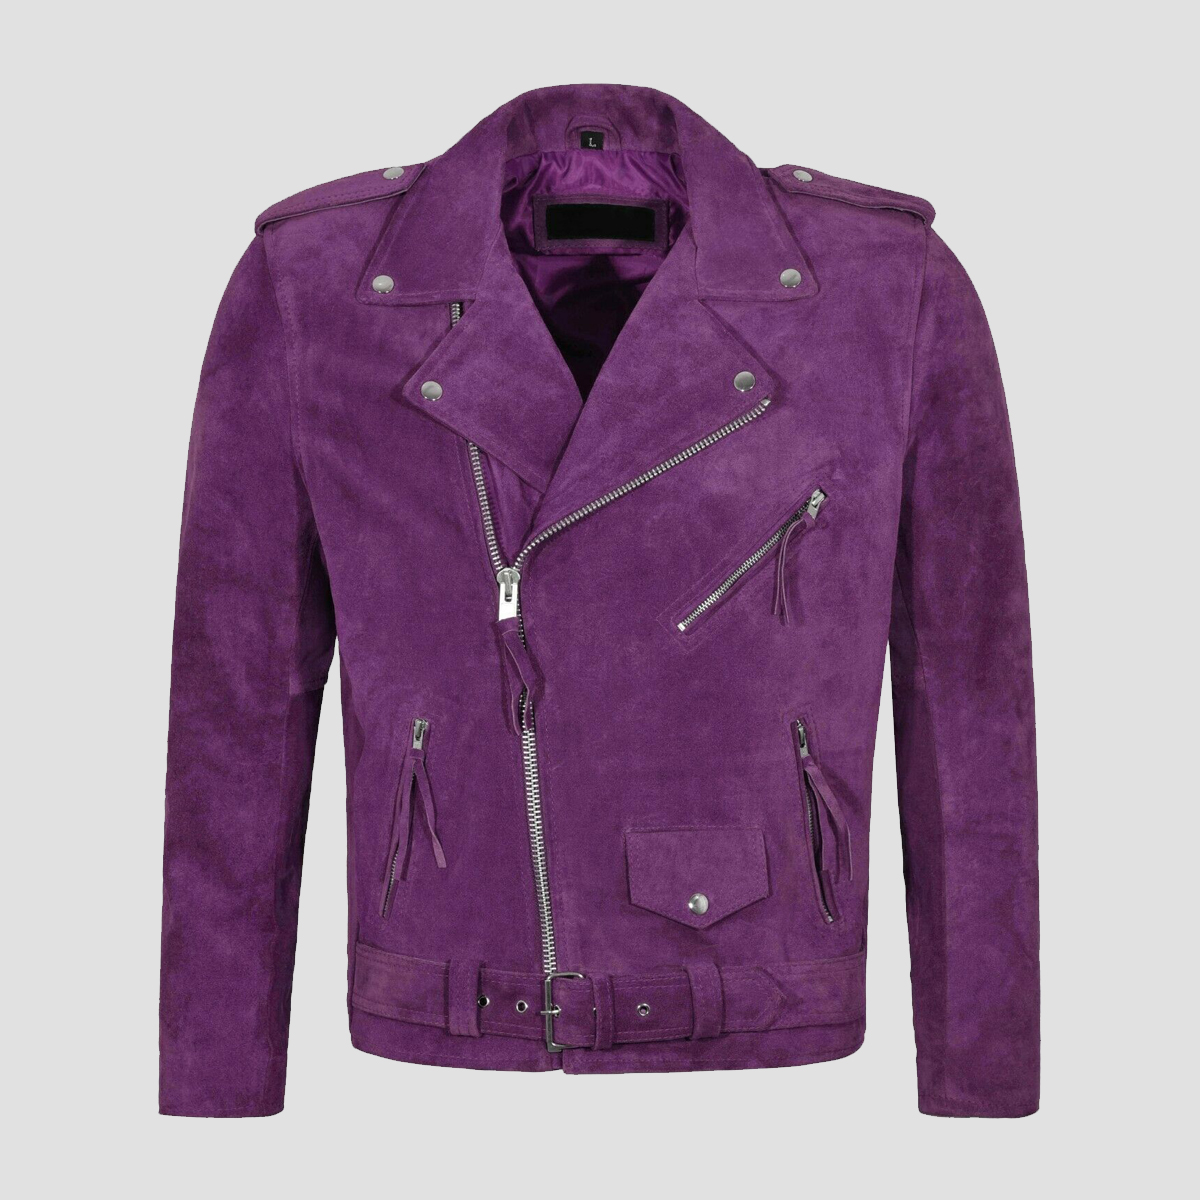 Brando Purple Suede Biker Jacket - The Vintage Leather